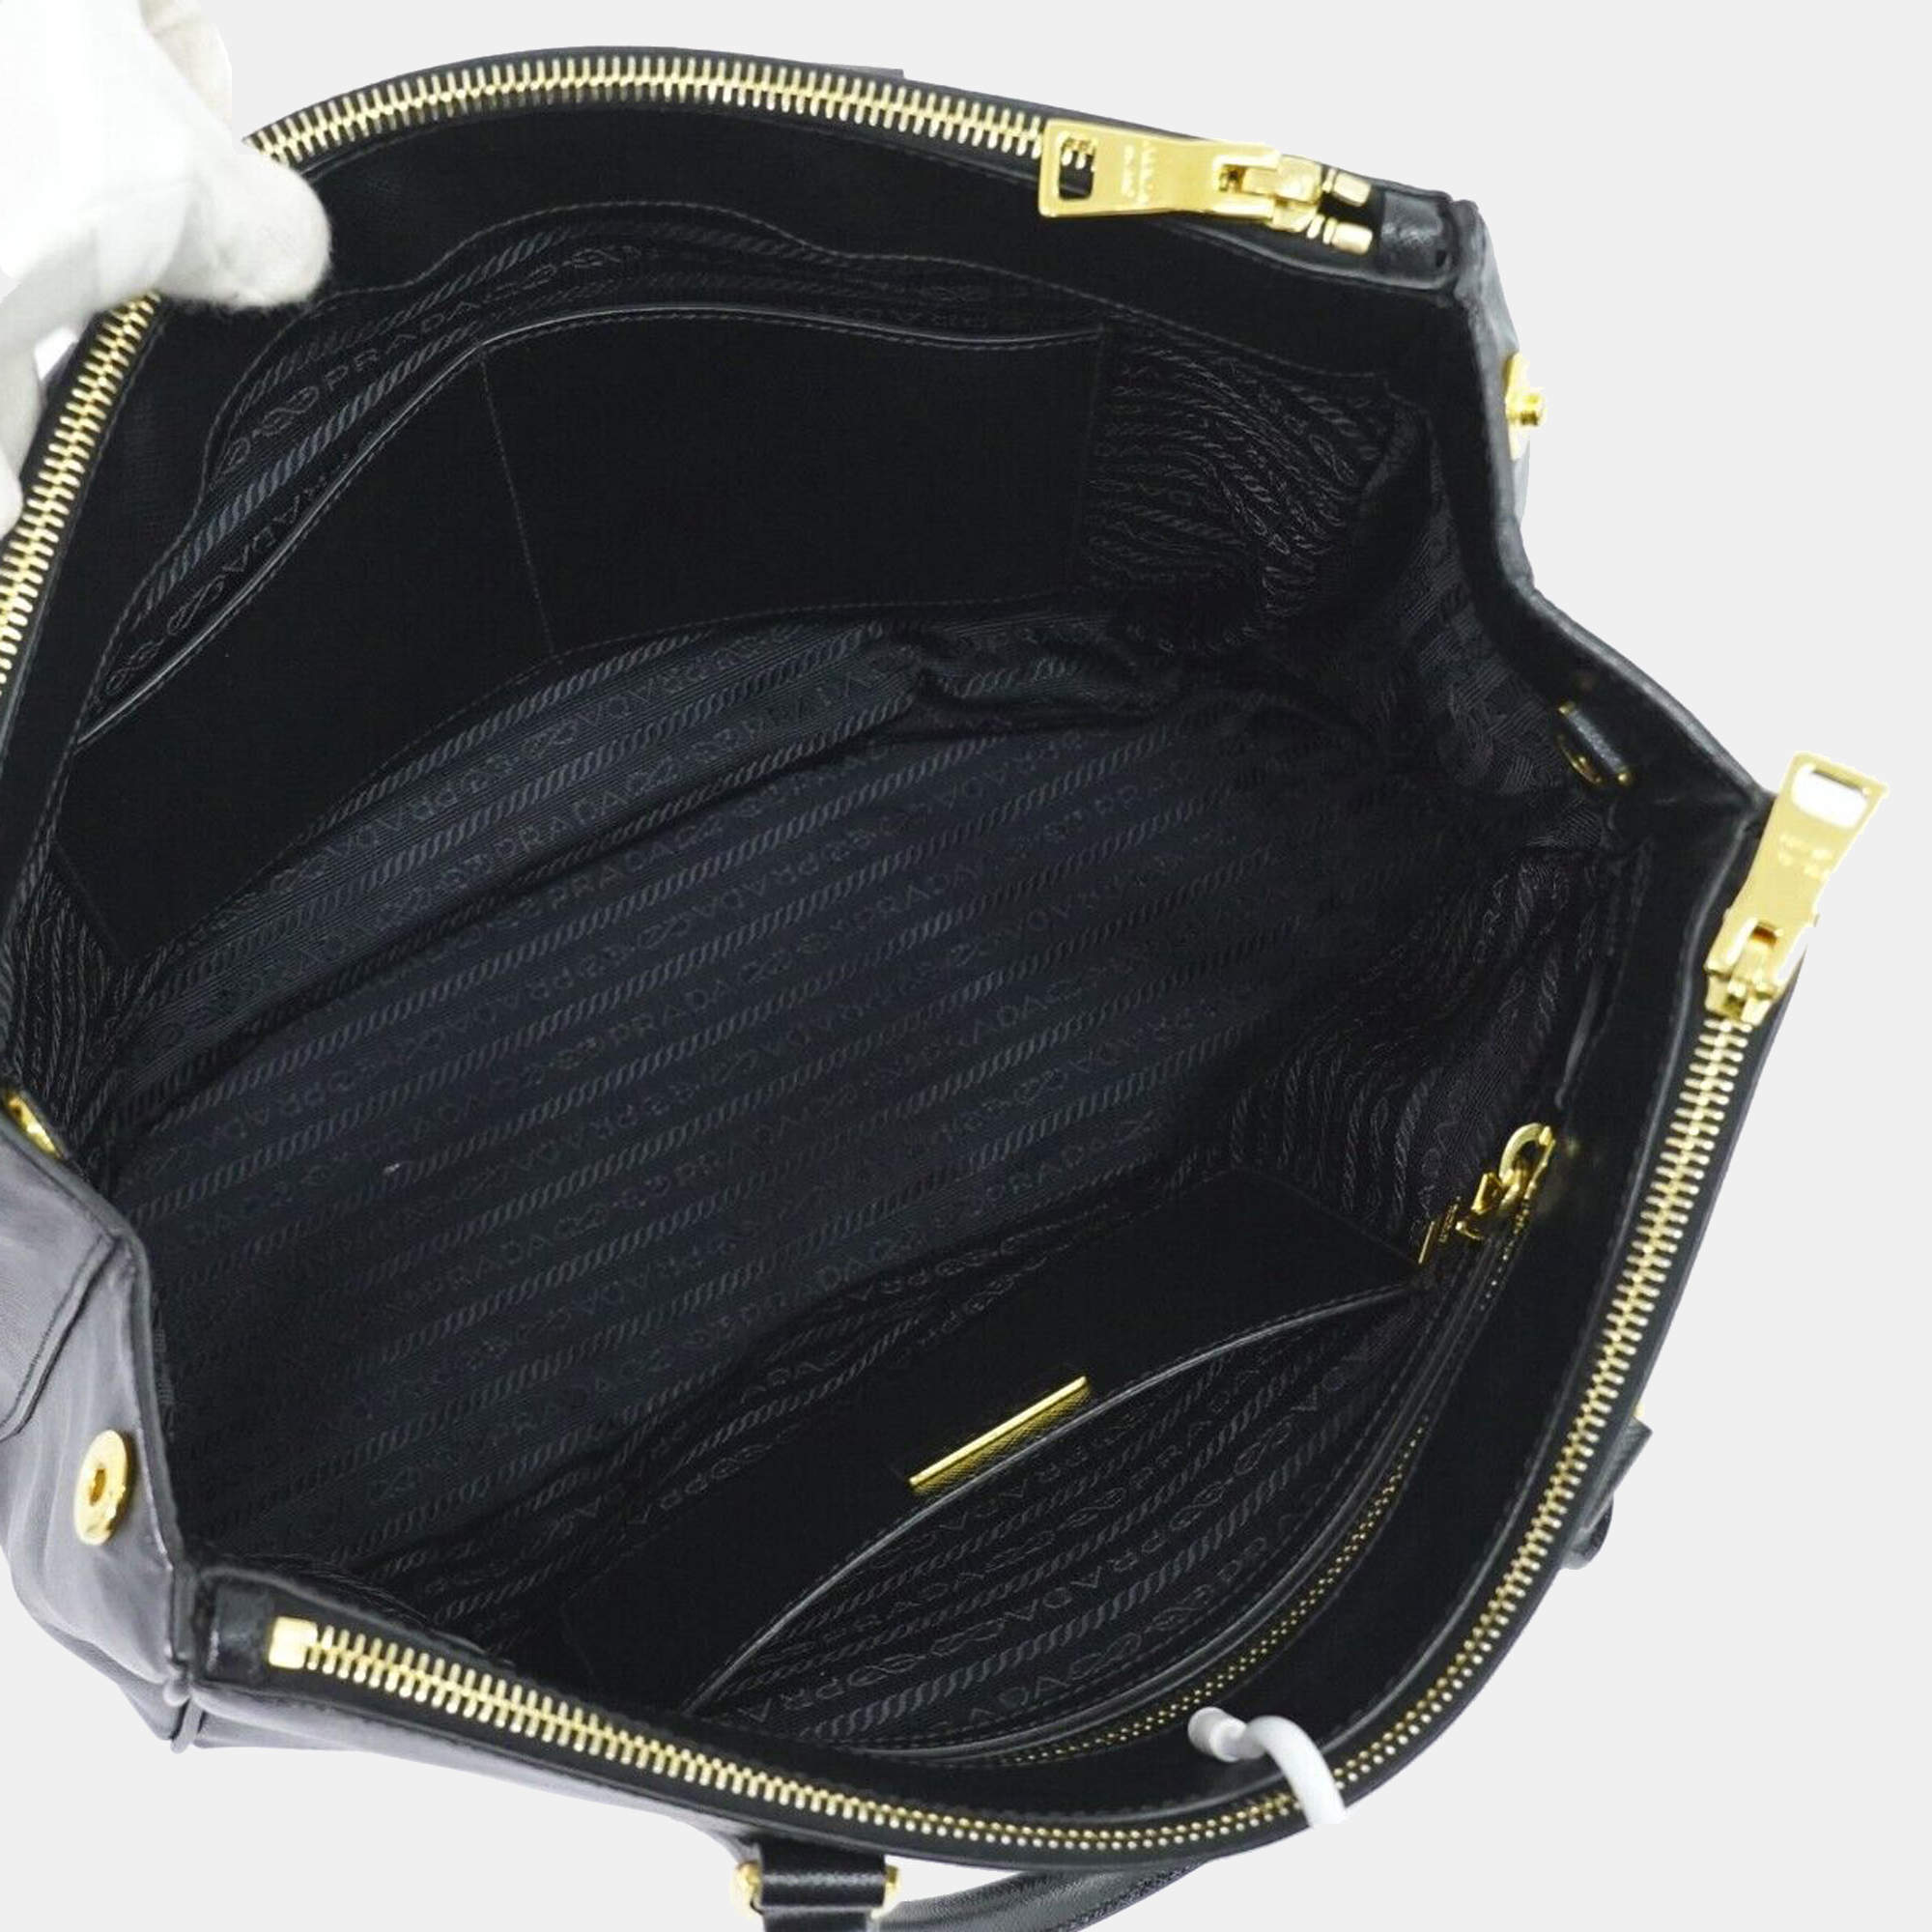 Galleria leather travel bag Prada Black in Leather - 27478116